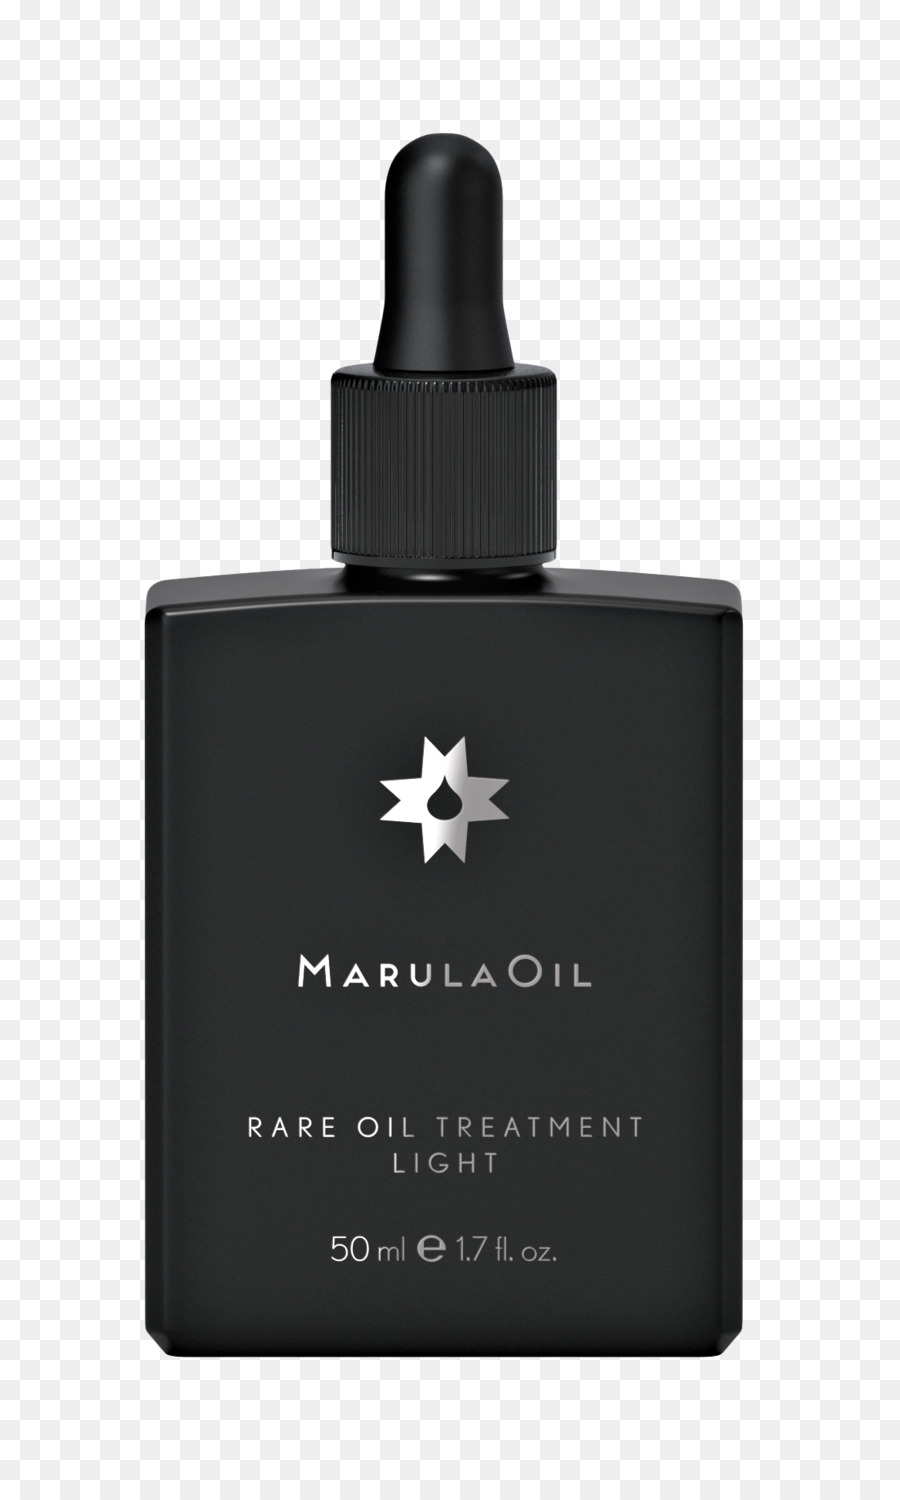 Marulaoil نادرة معالجة النفط，بول ميتشل زيت مارولا نادرة معالجة النفط ضوء 50ml PNG